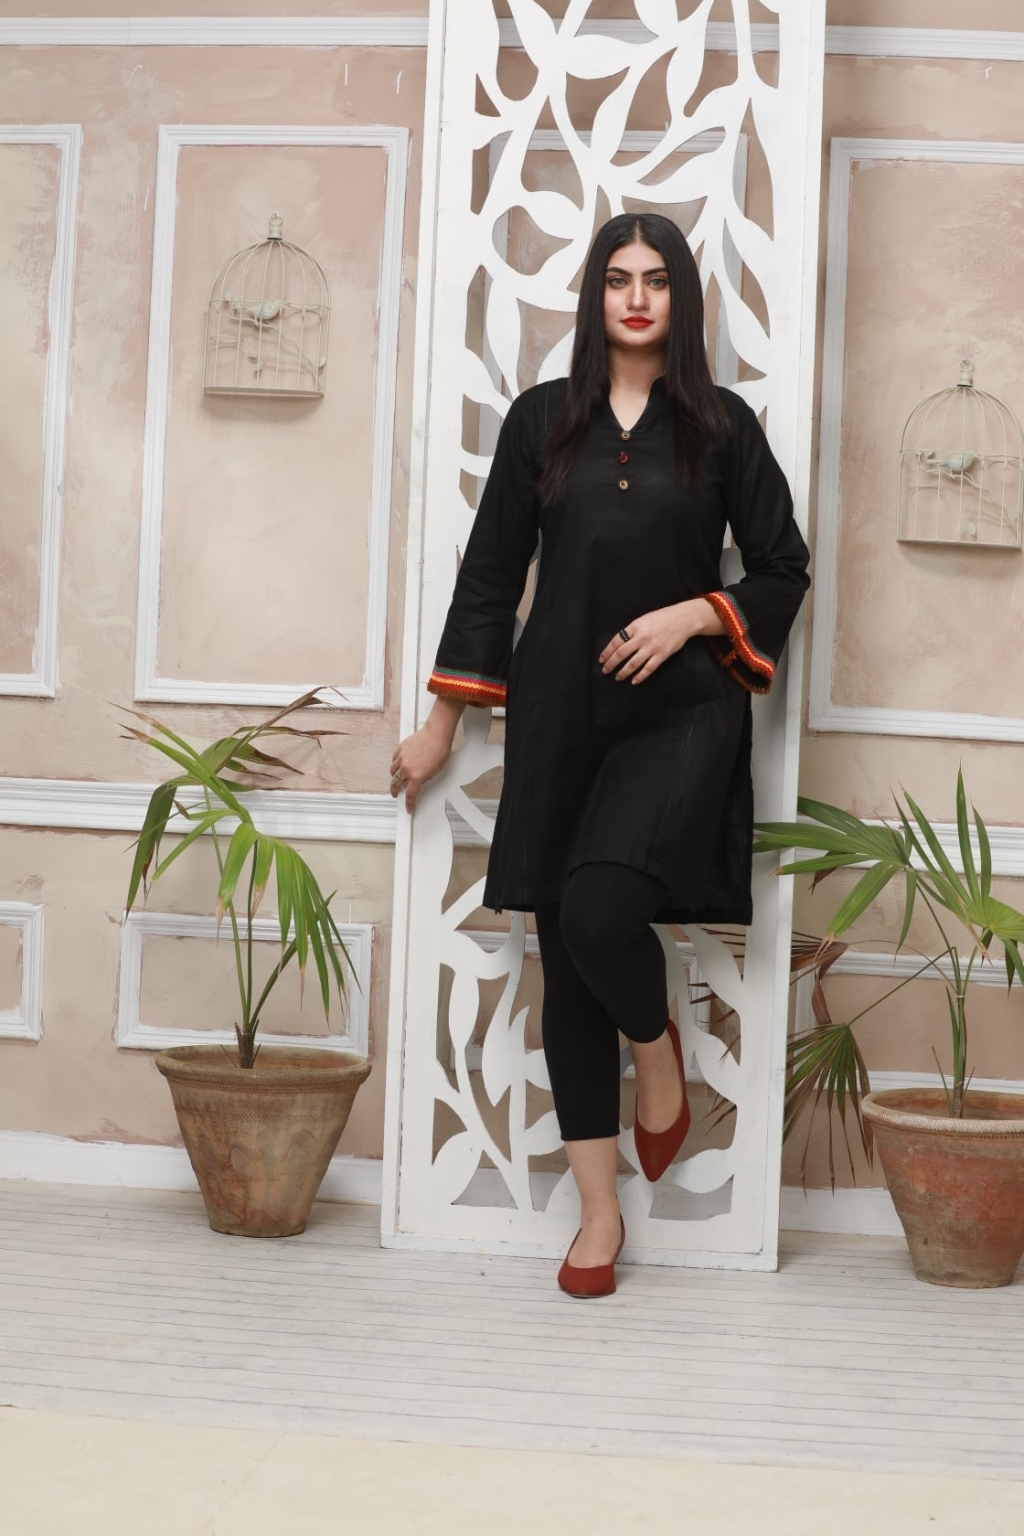 Buy Black Cotton Plain Shalwar Kameez In Pakistan Online Shopping In